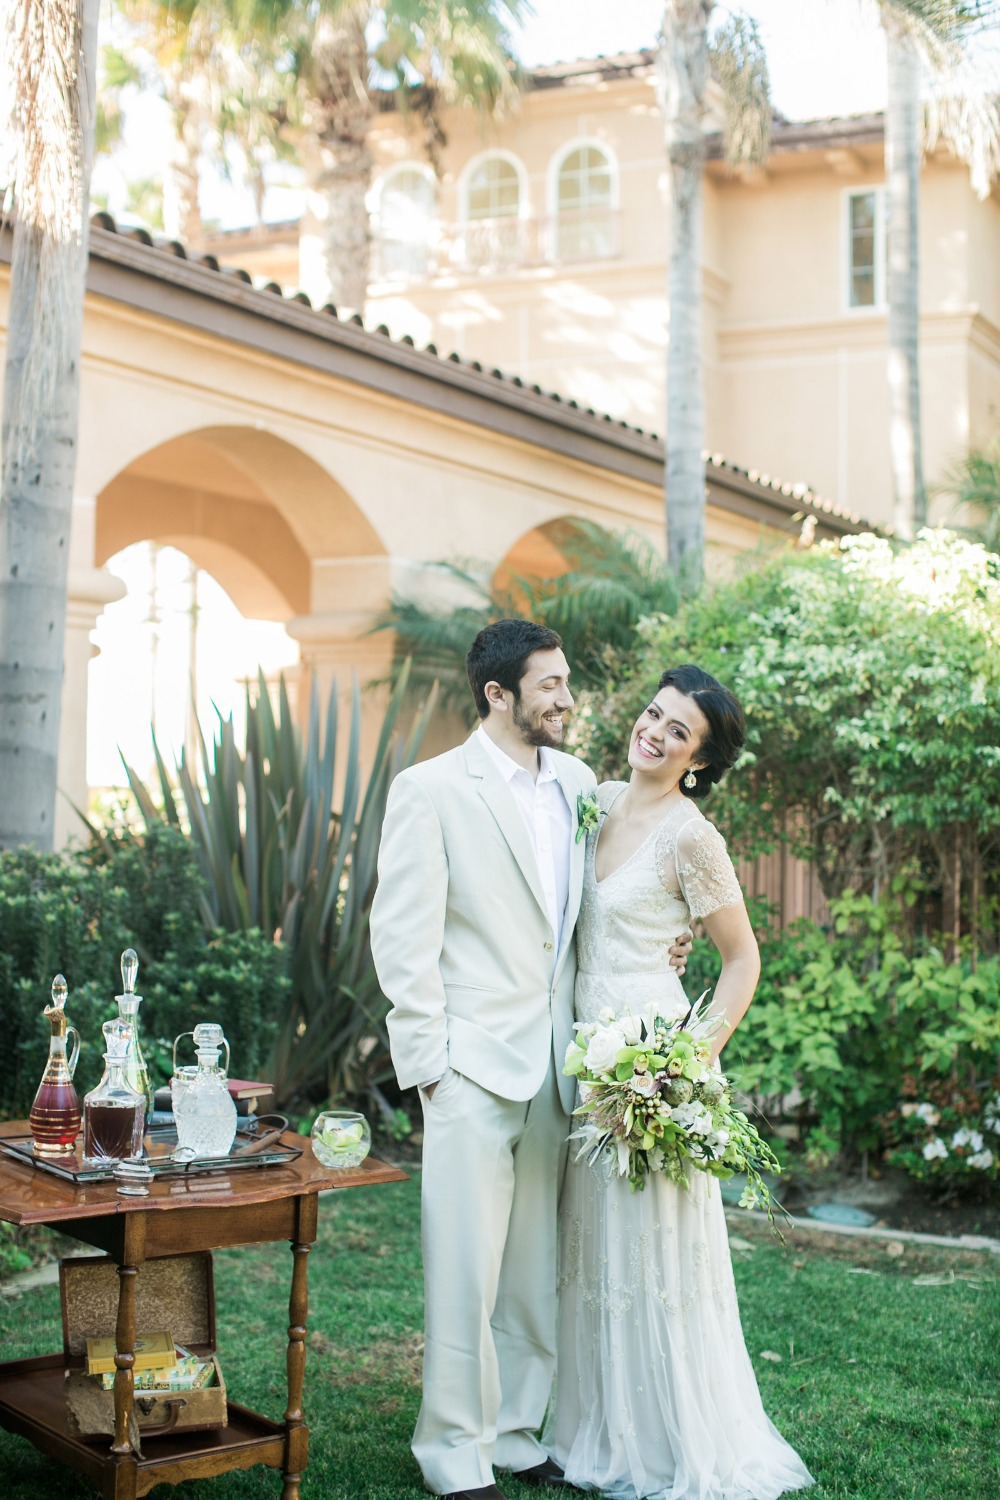 Havana Cuba inspired wedding ideas